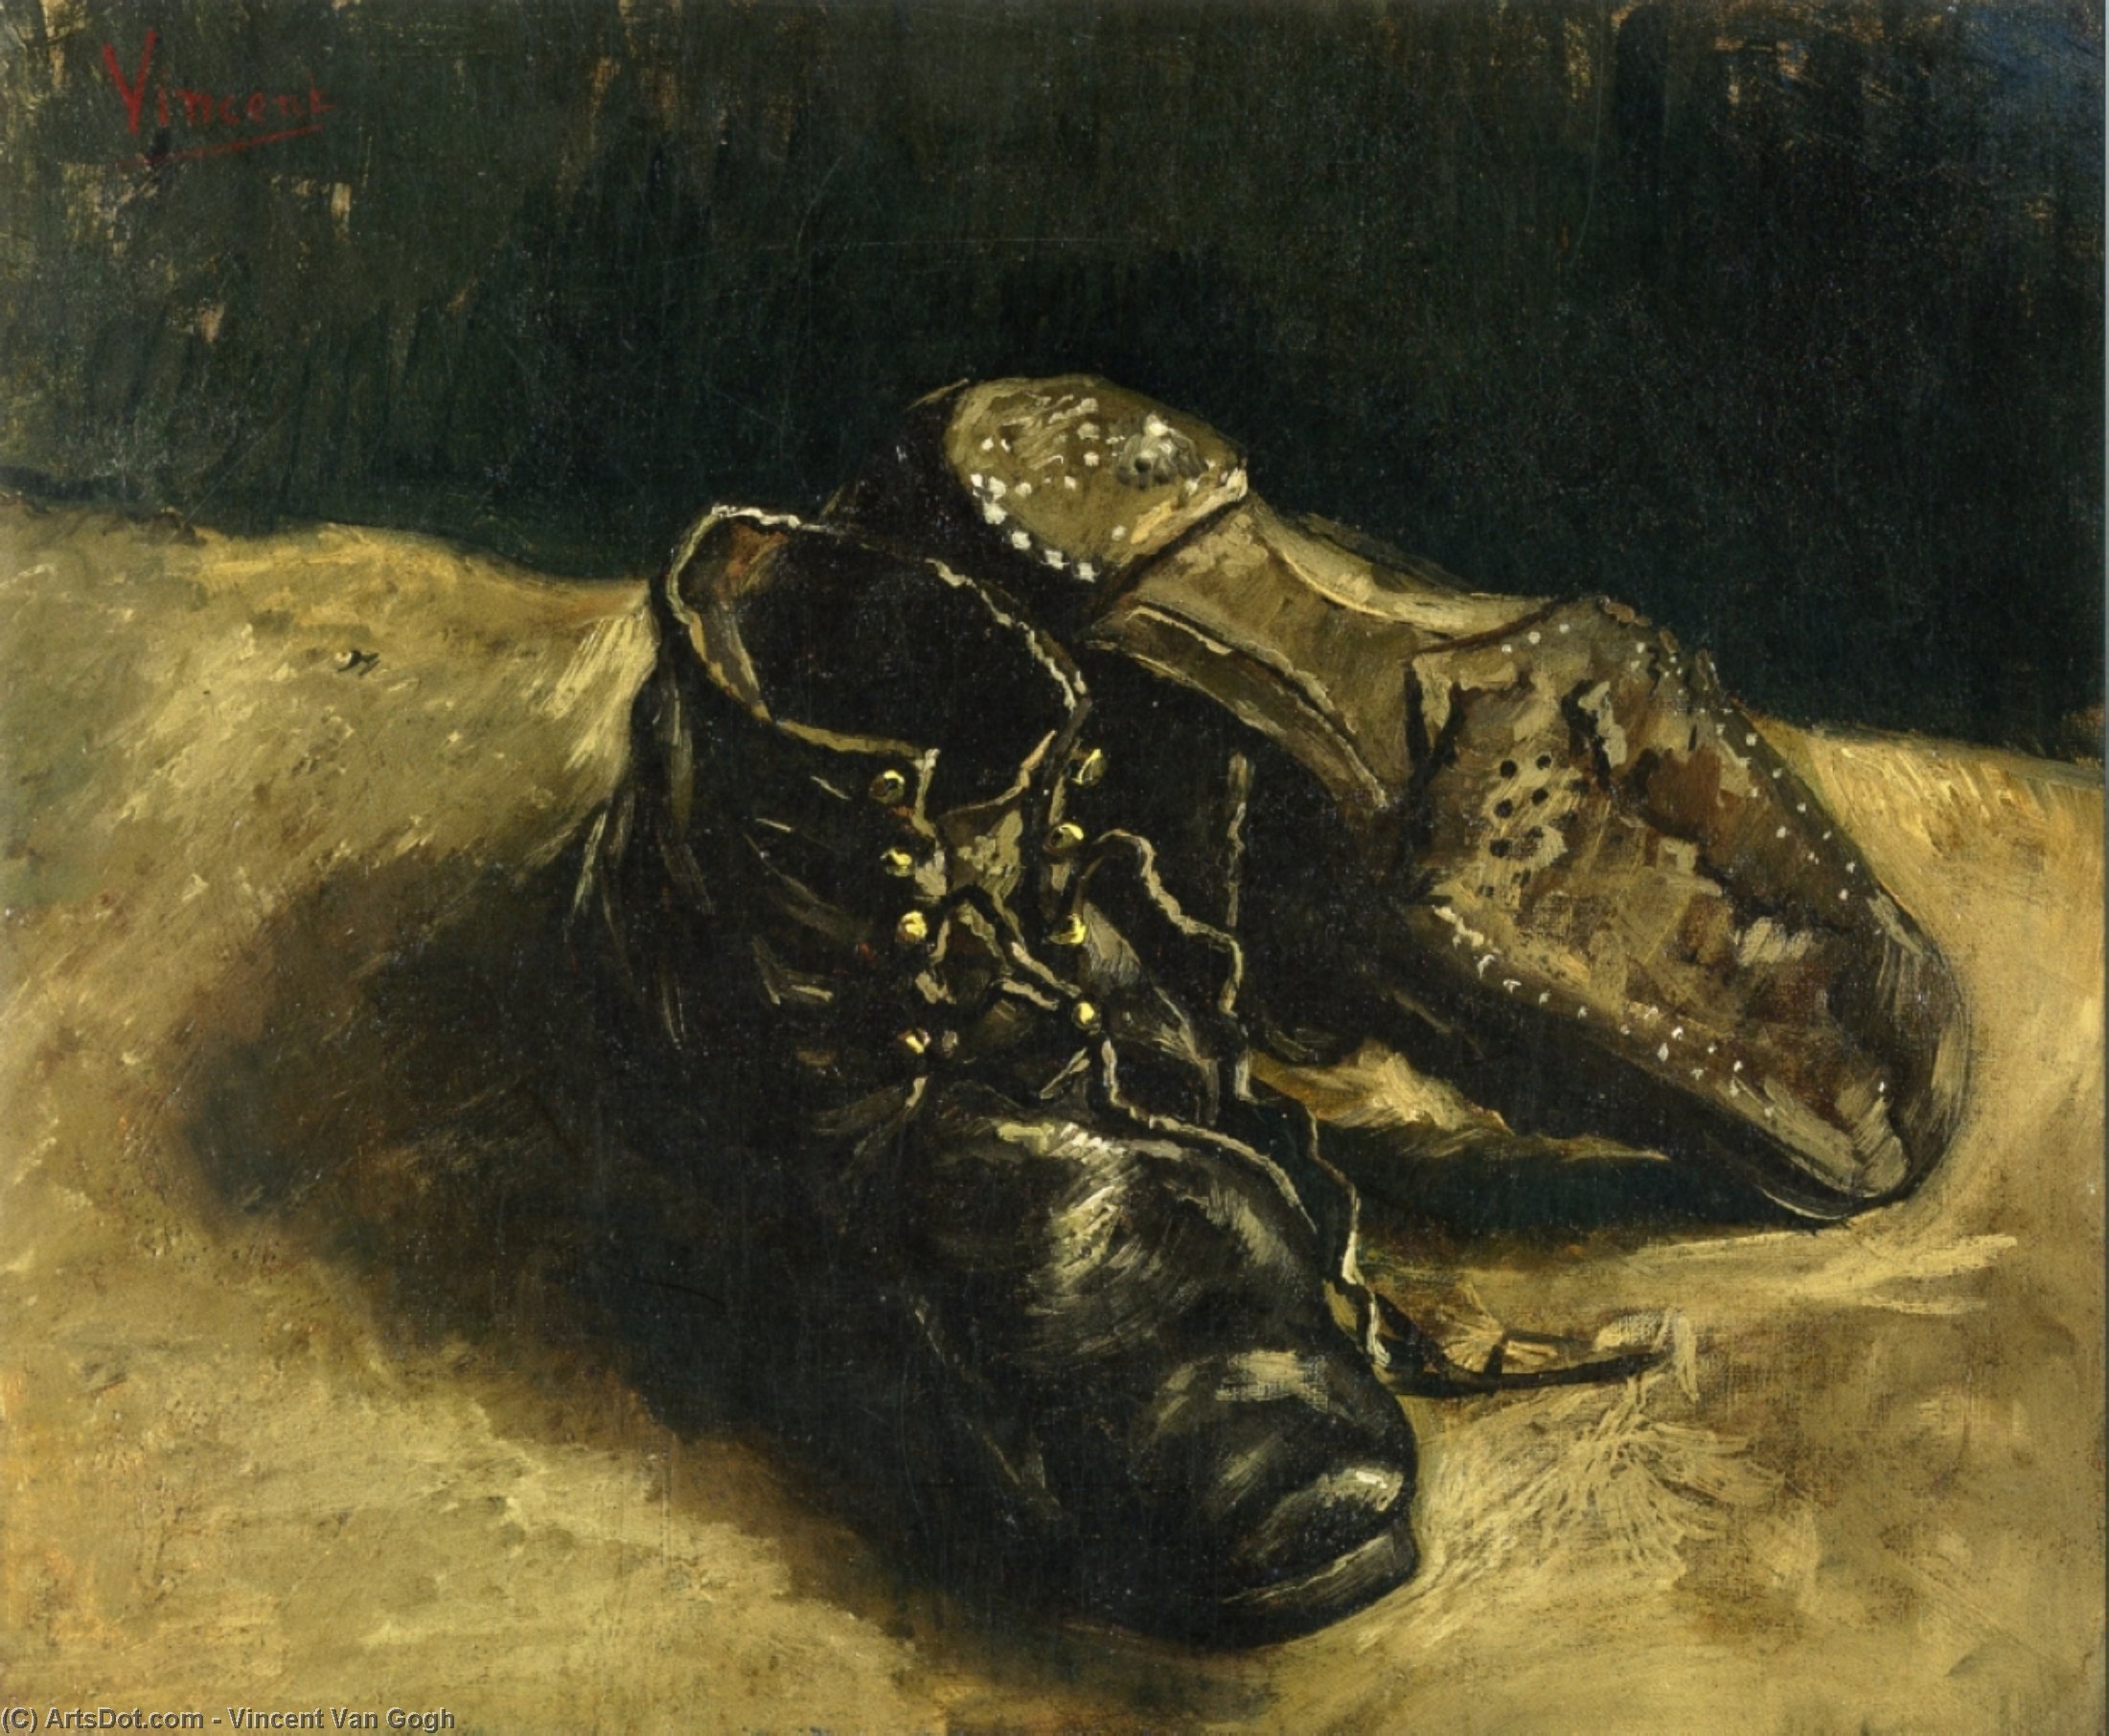 A Pair of Shoes - Vincent Van Gogh 